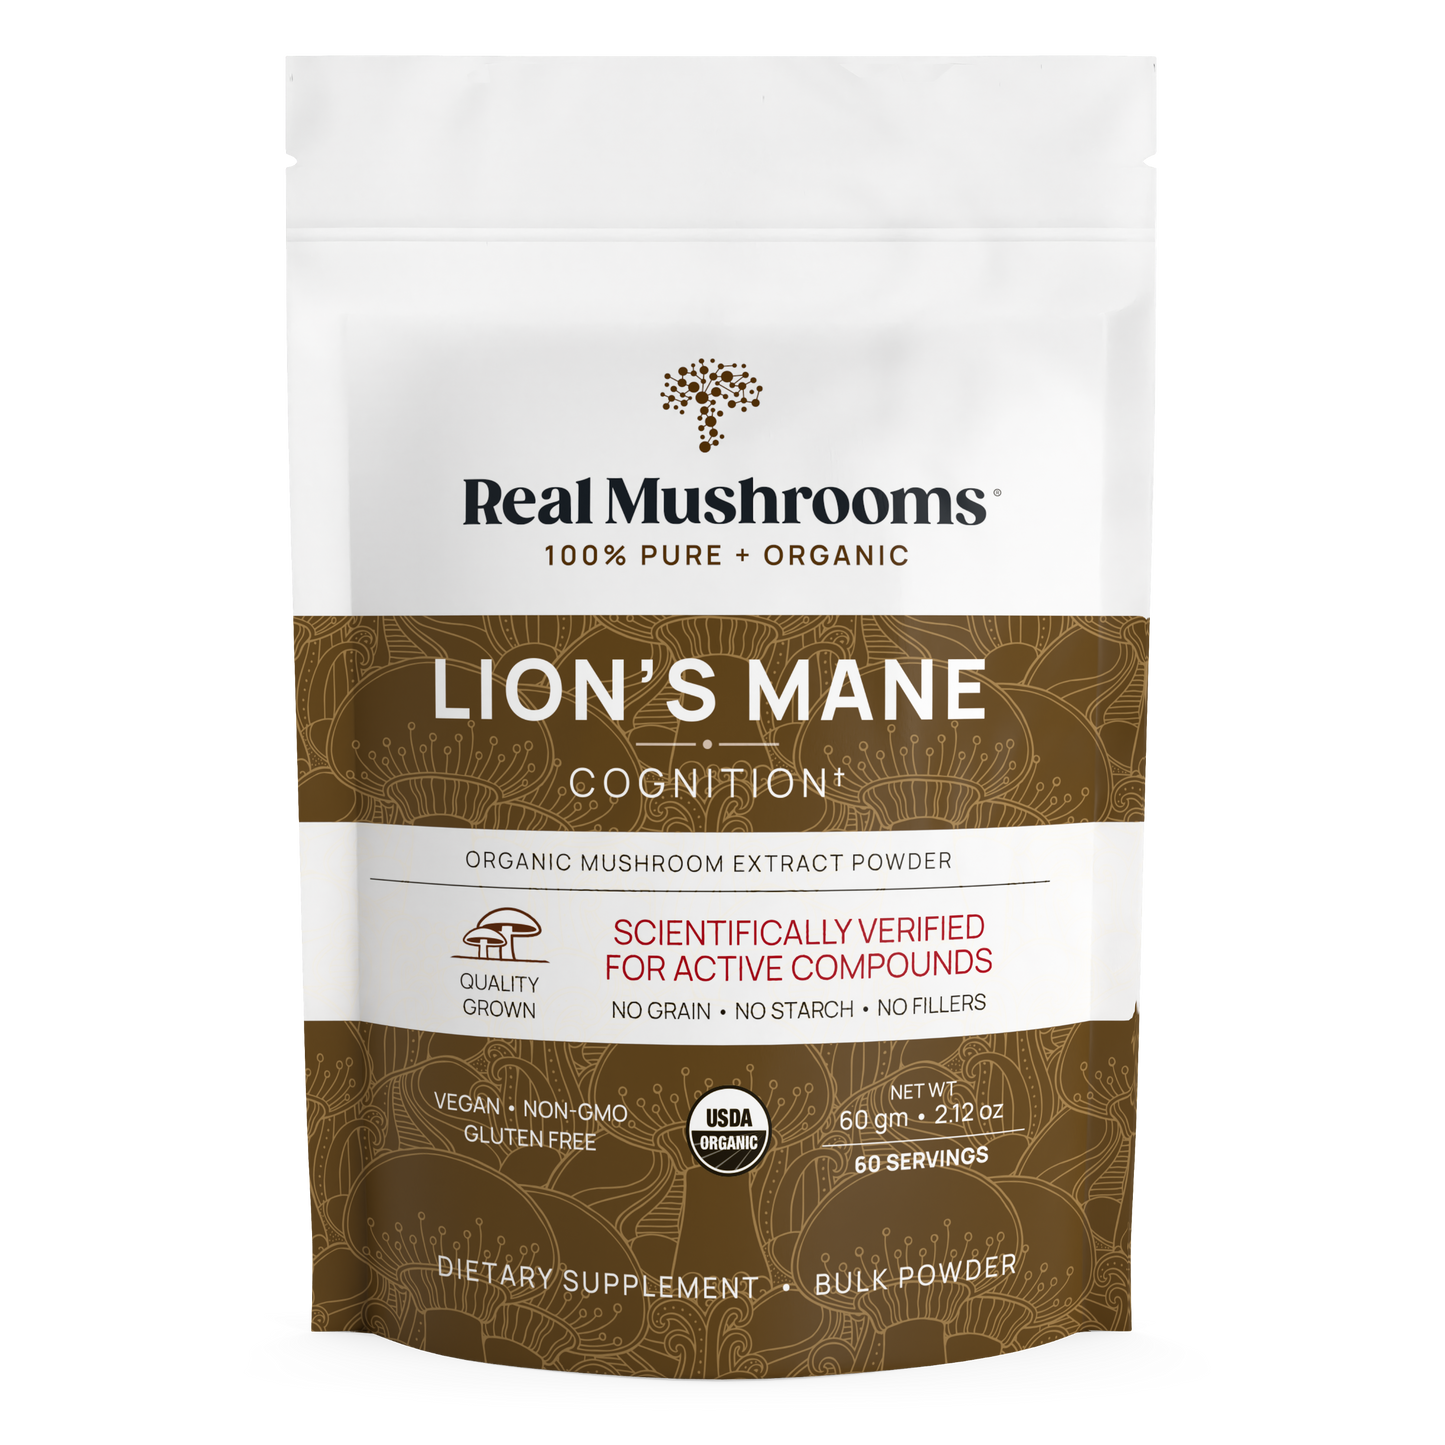 Real Mushrooms Organic Lions Mane Mushroom Powder – Bulk Extract.